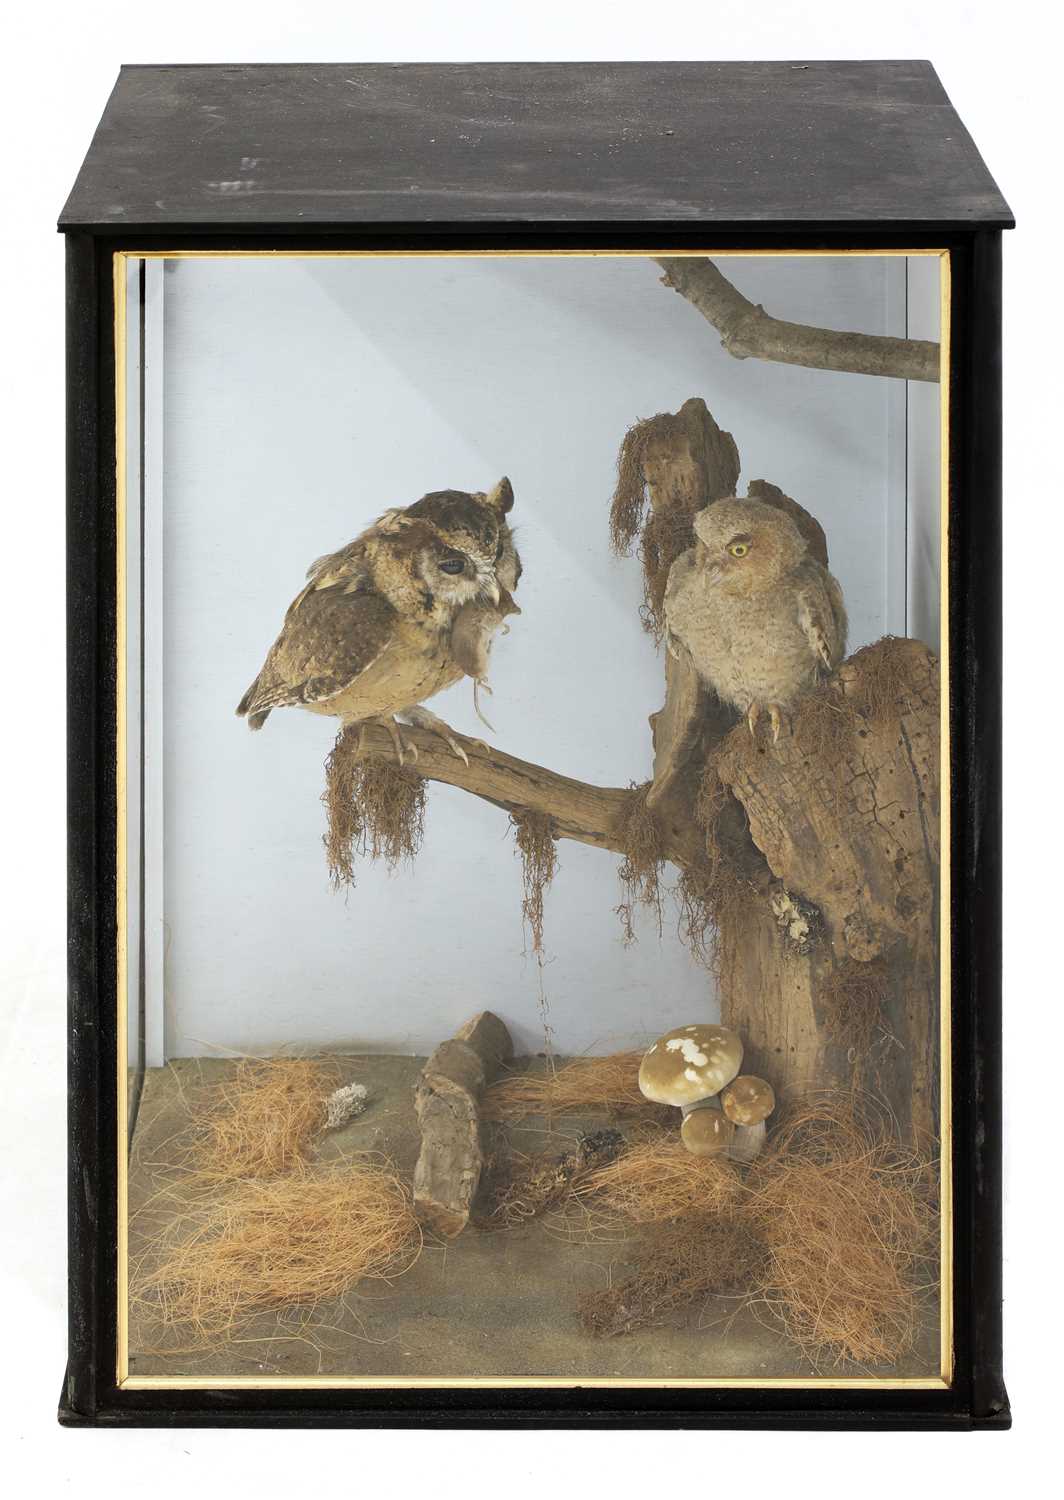 Lot 138 - Taxidermy: Indian scops owl (Otus bakkamoena)